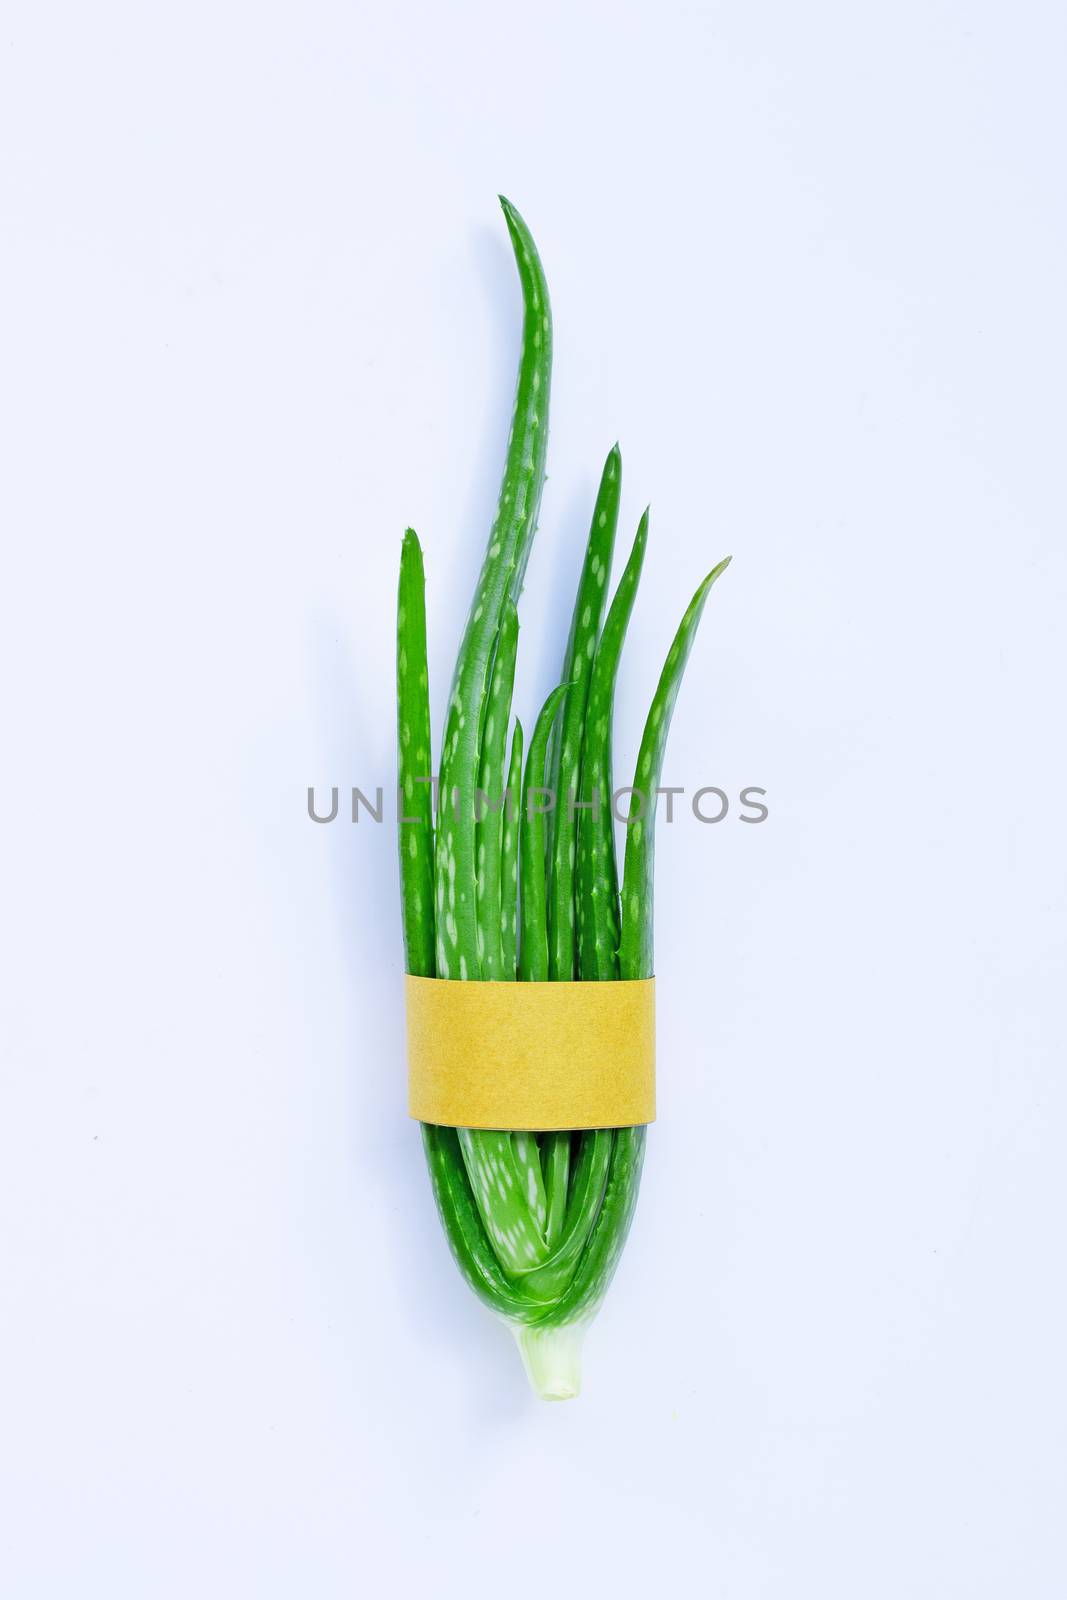 Aloe vera  on white background.